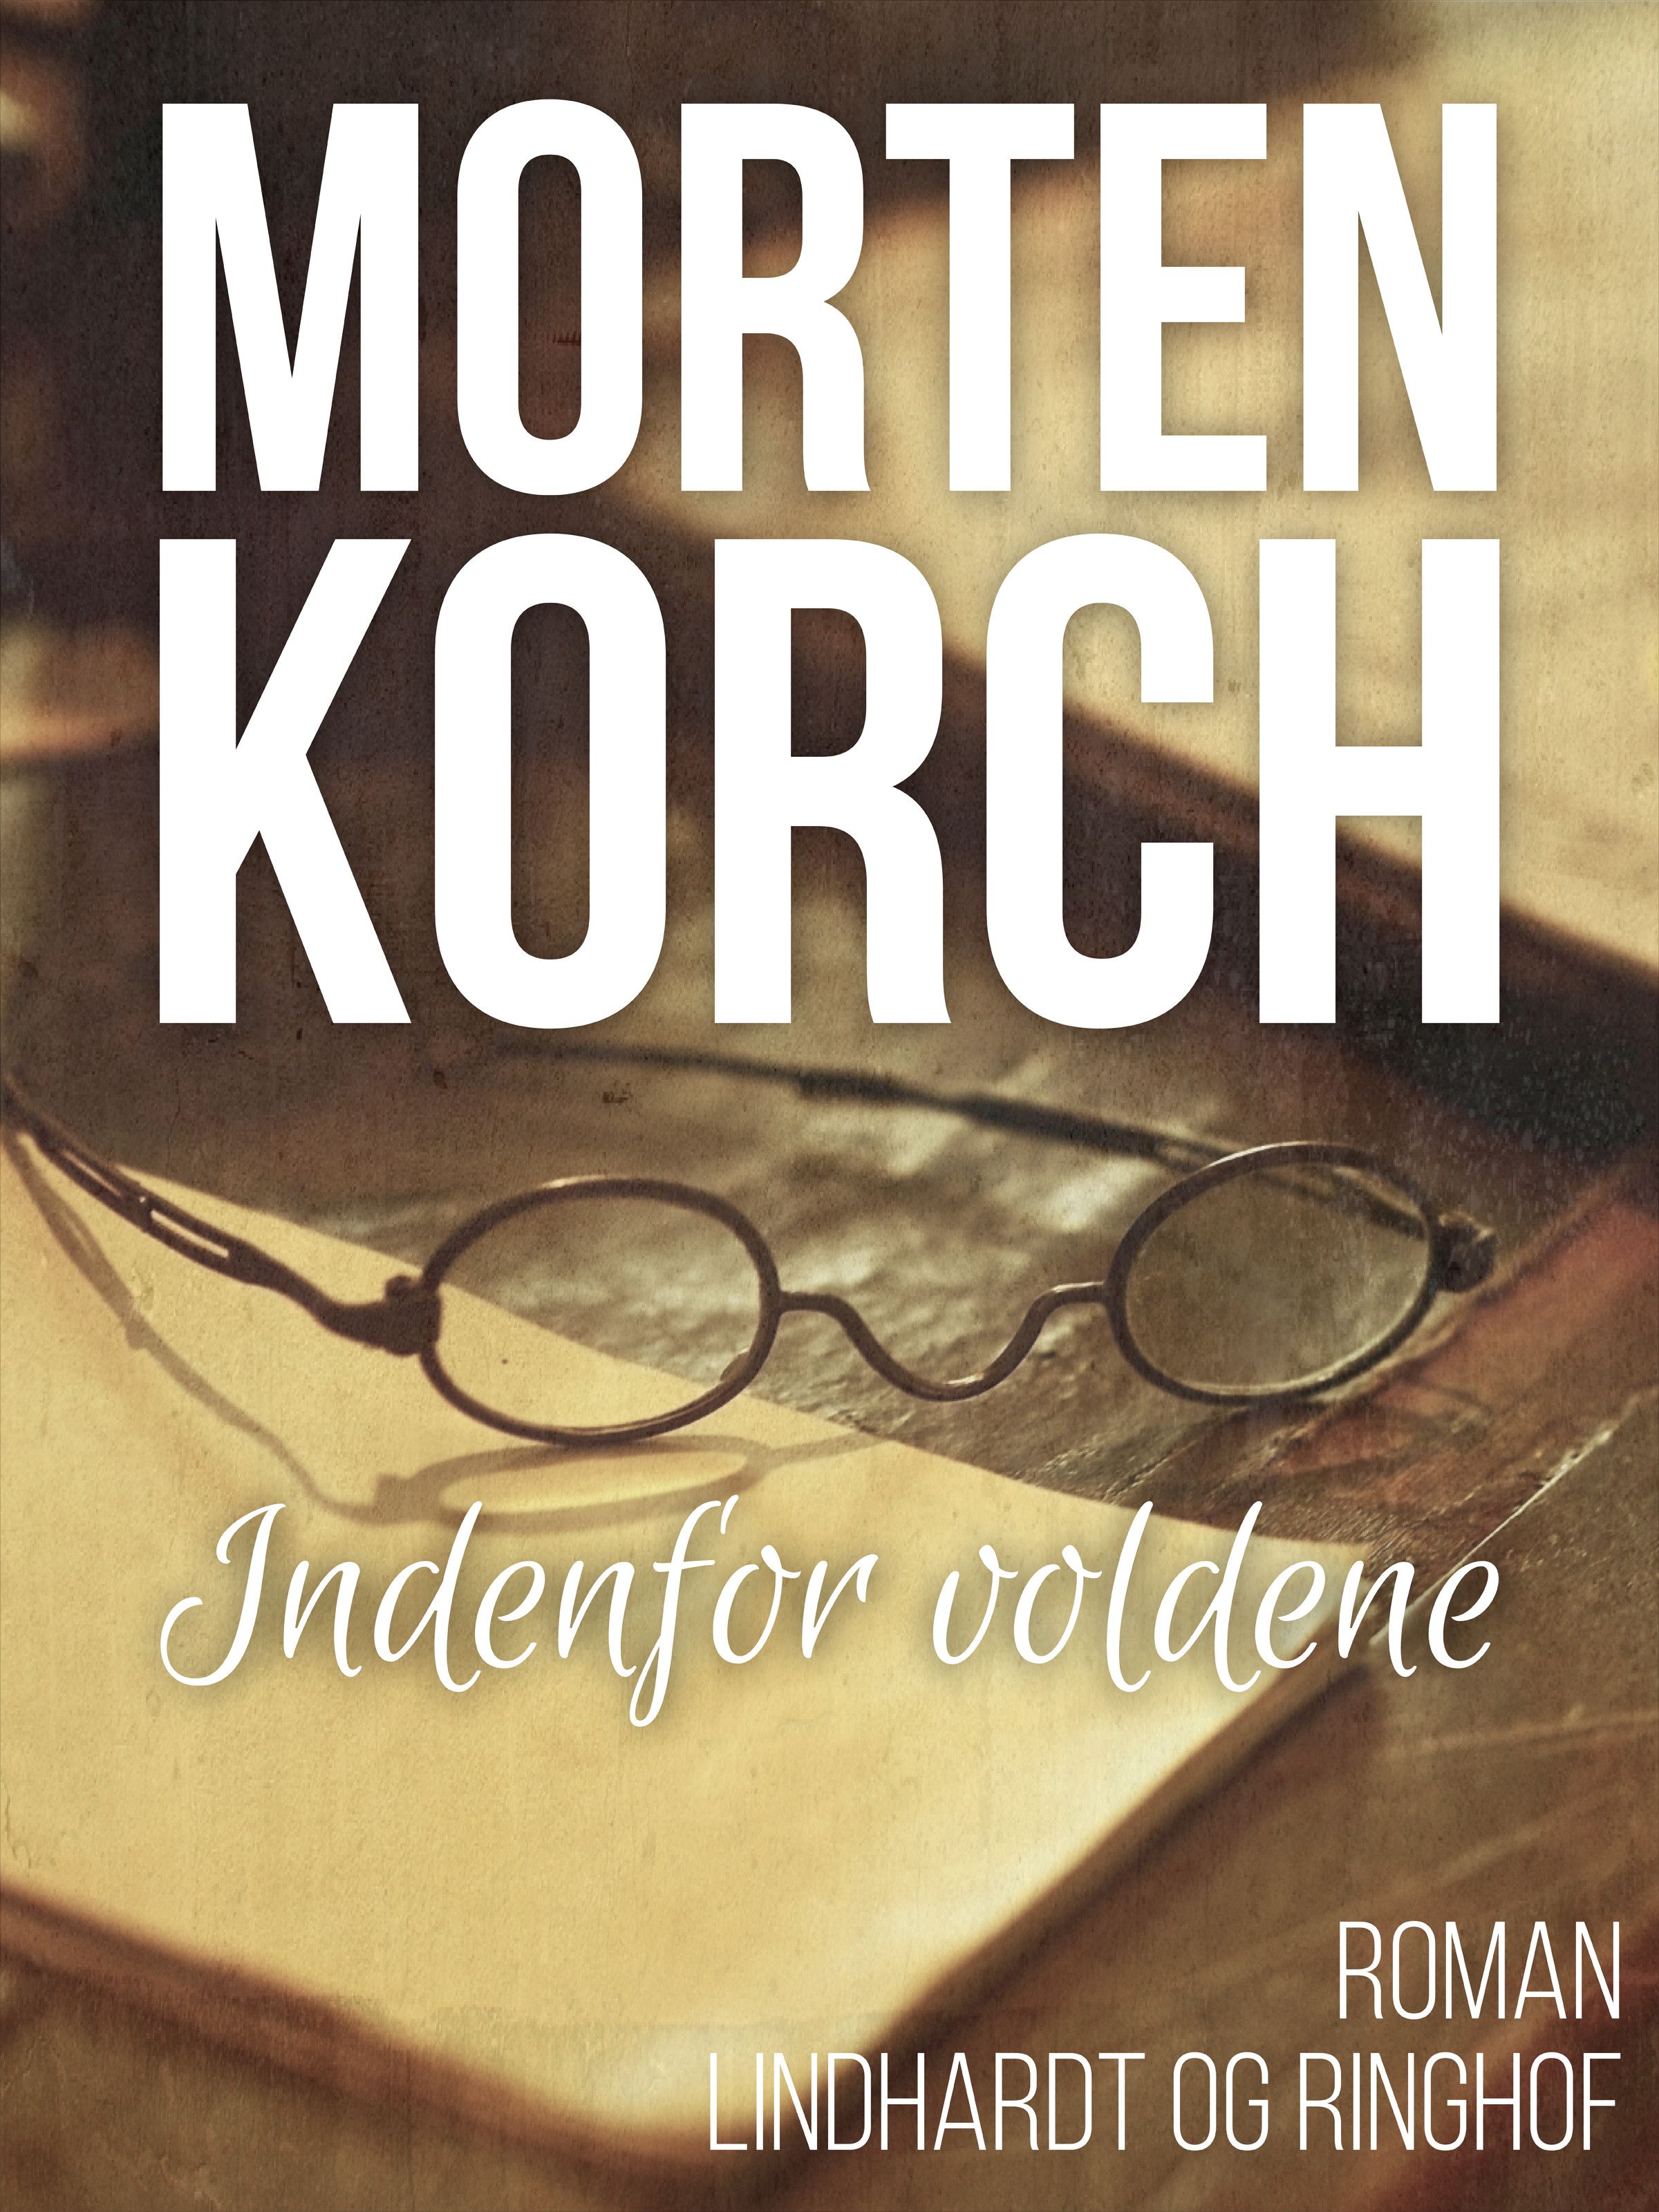 Indenfor voldene, ljudbok av Morten Korch